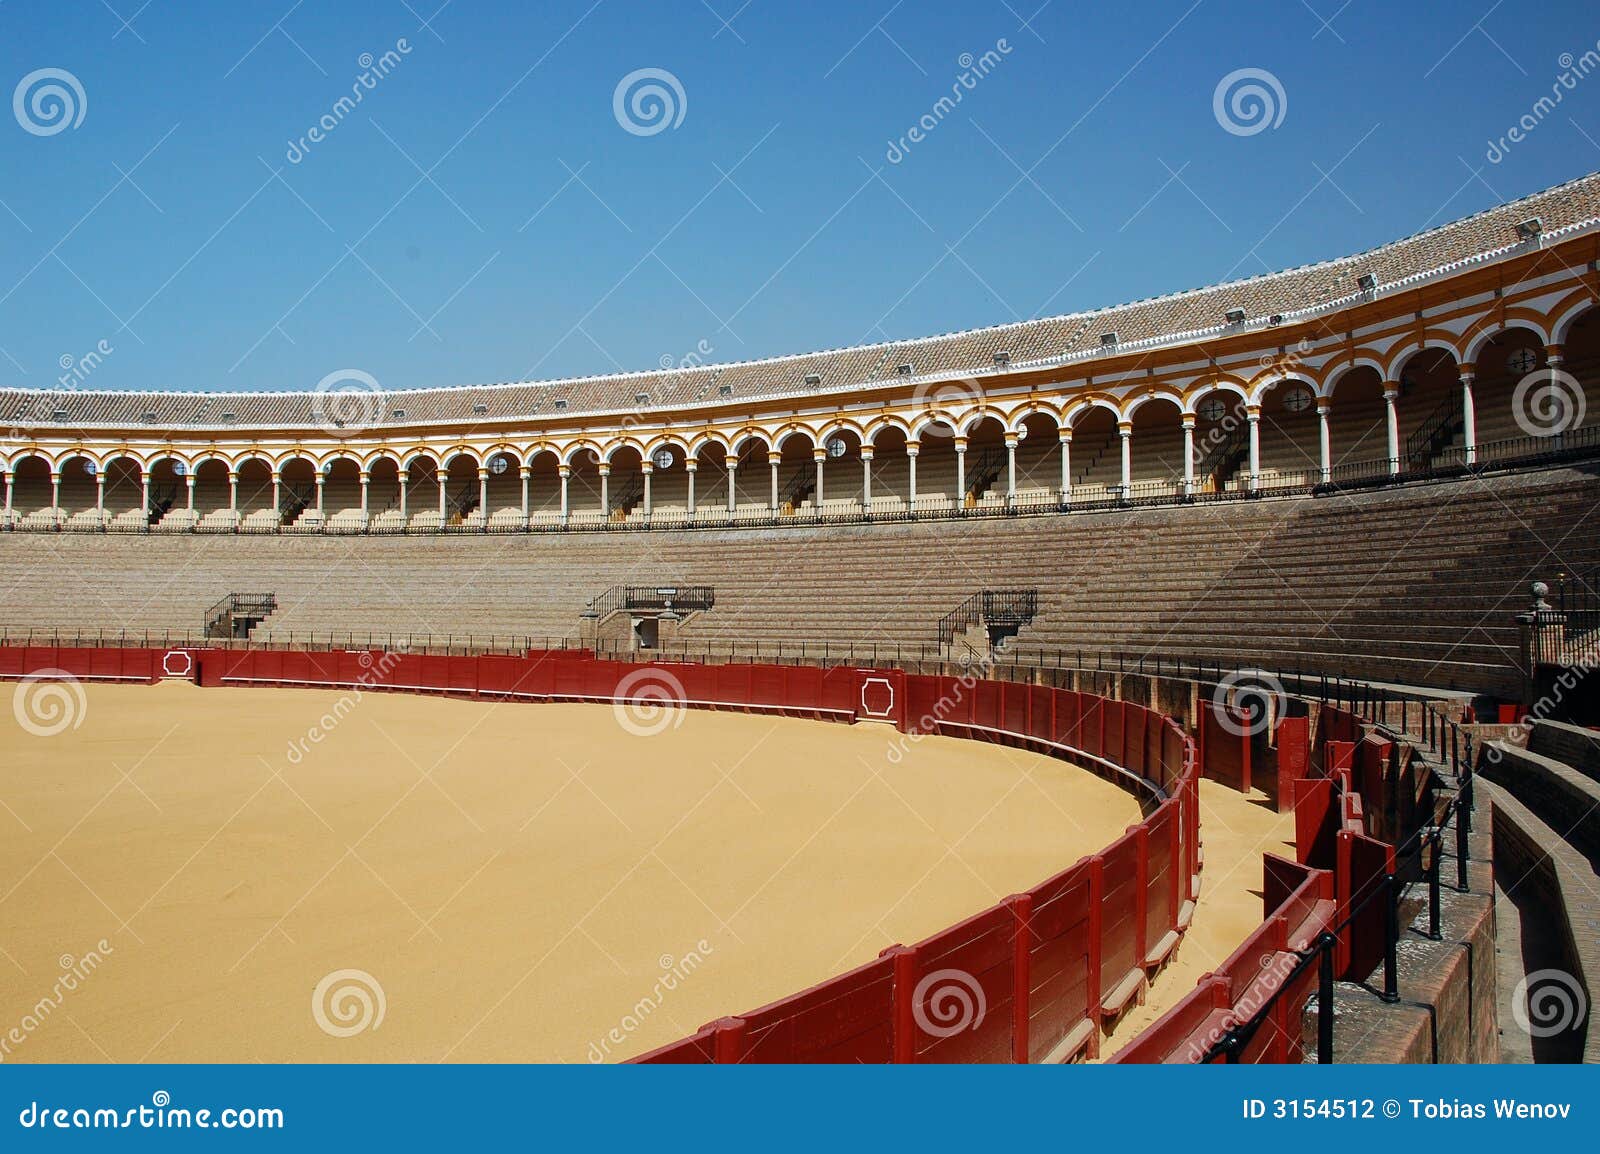 beautiful bullfight arena in s